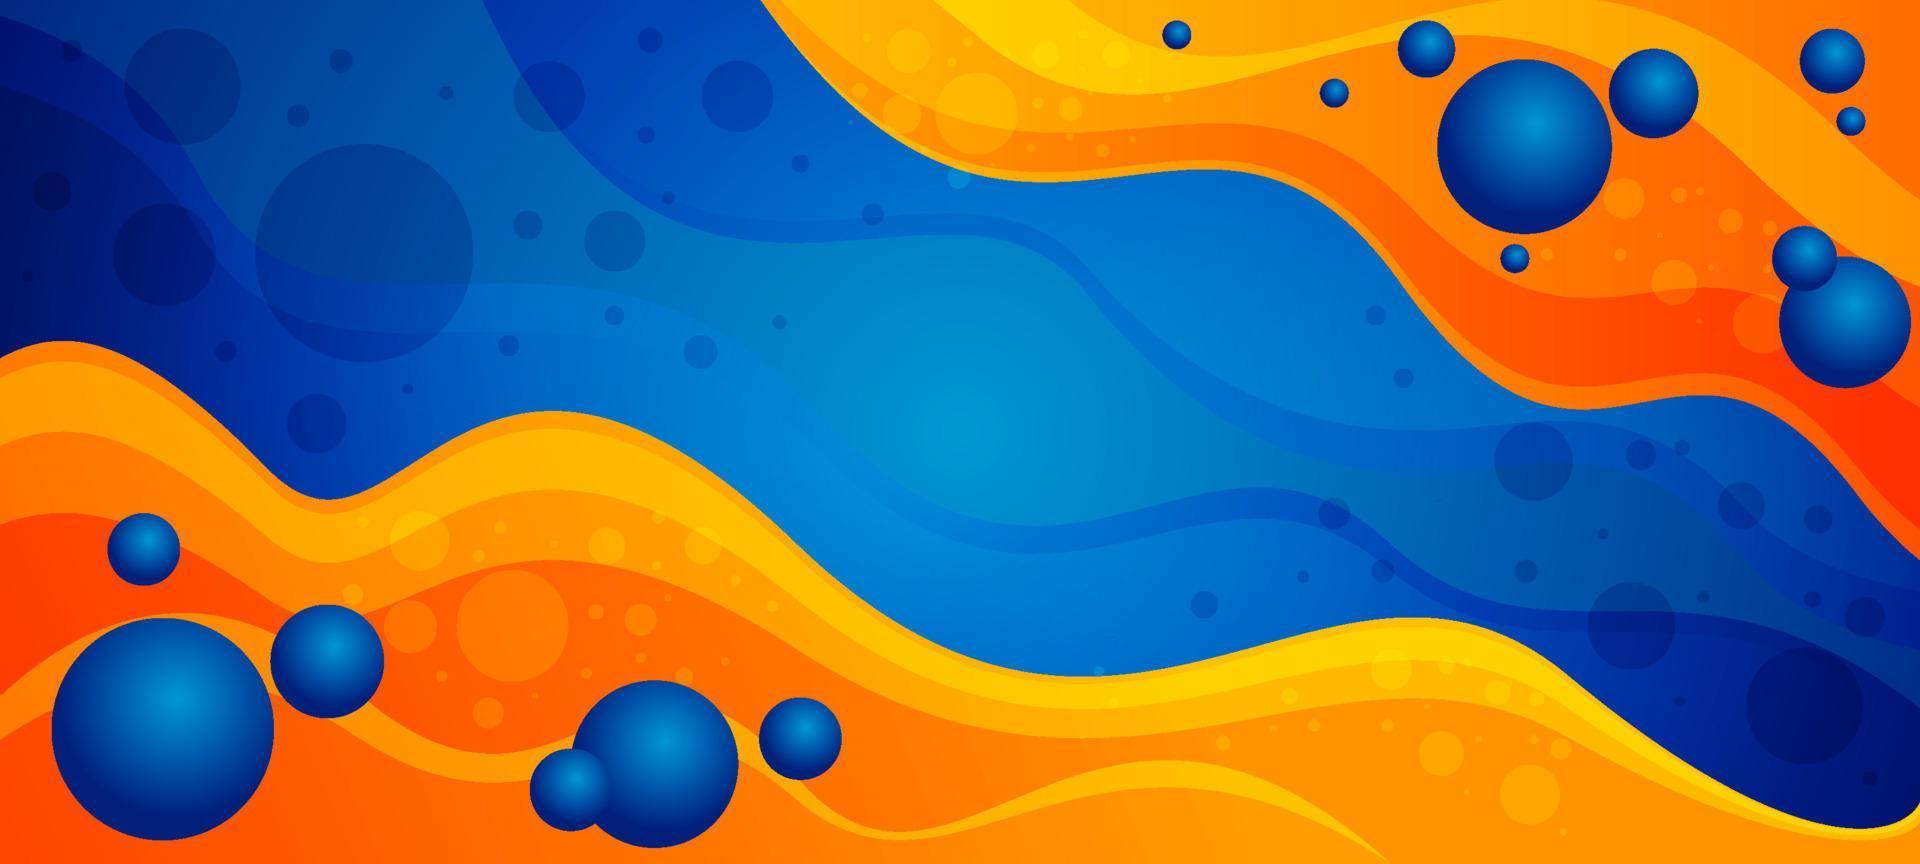 Blue Orange Fluid Wave Background vector